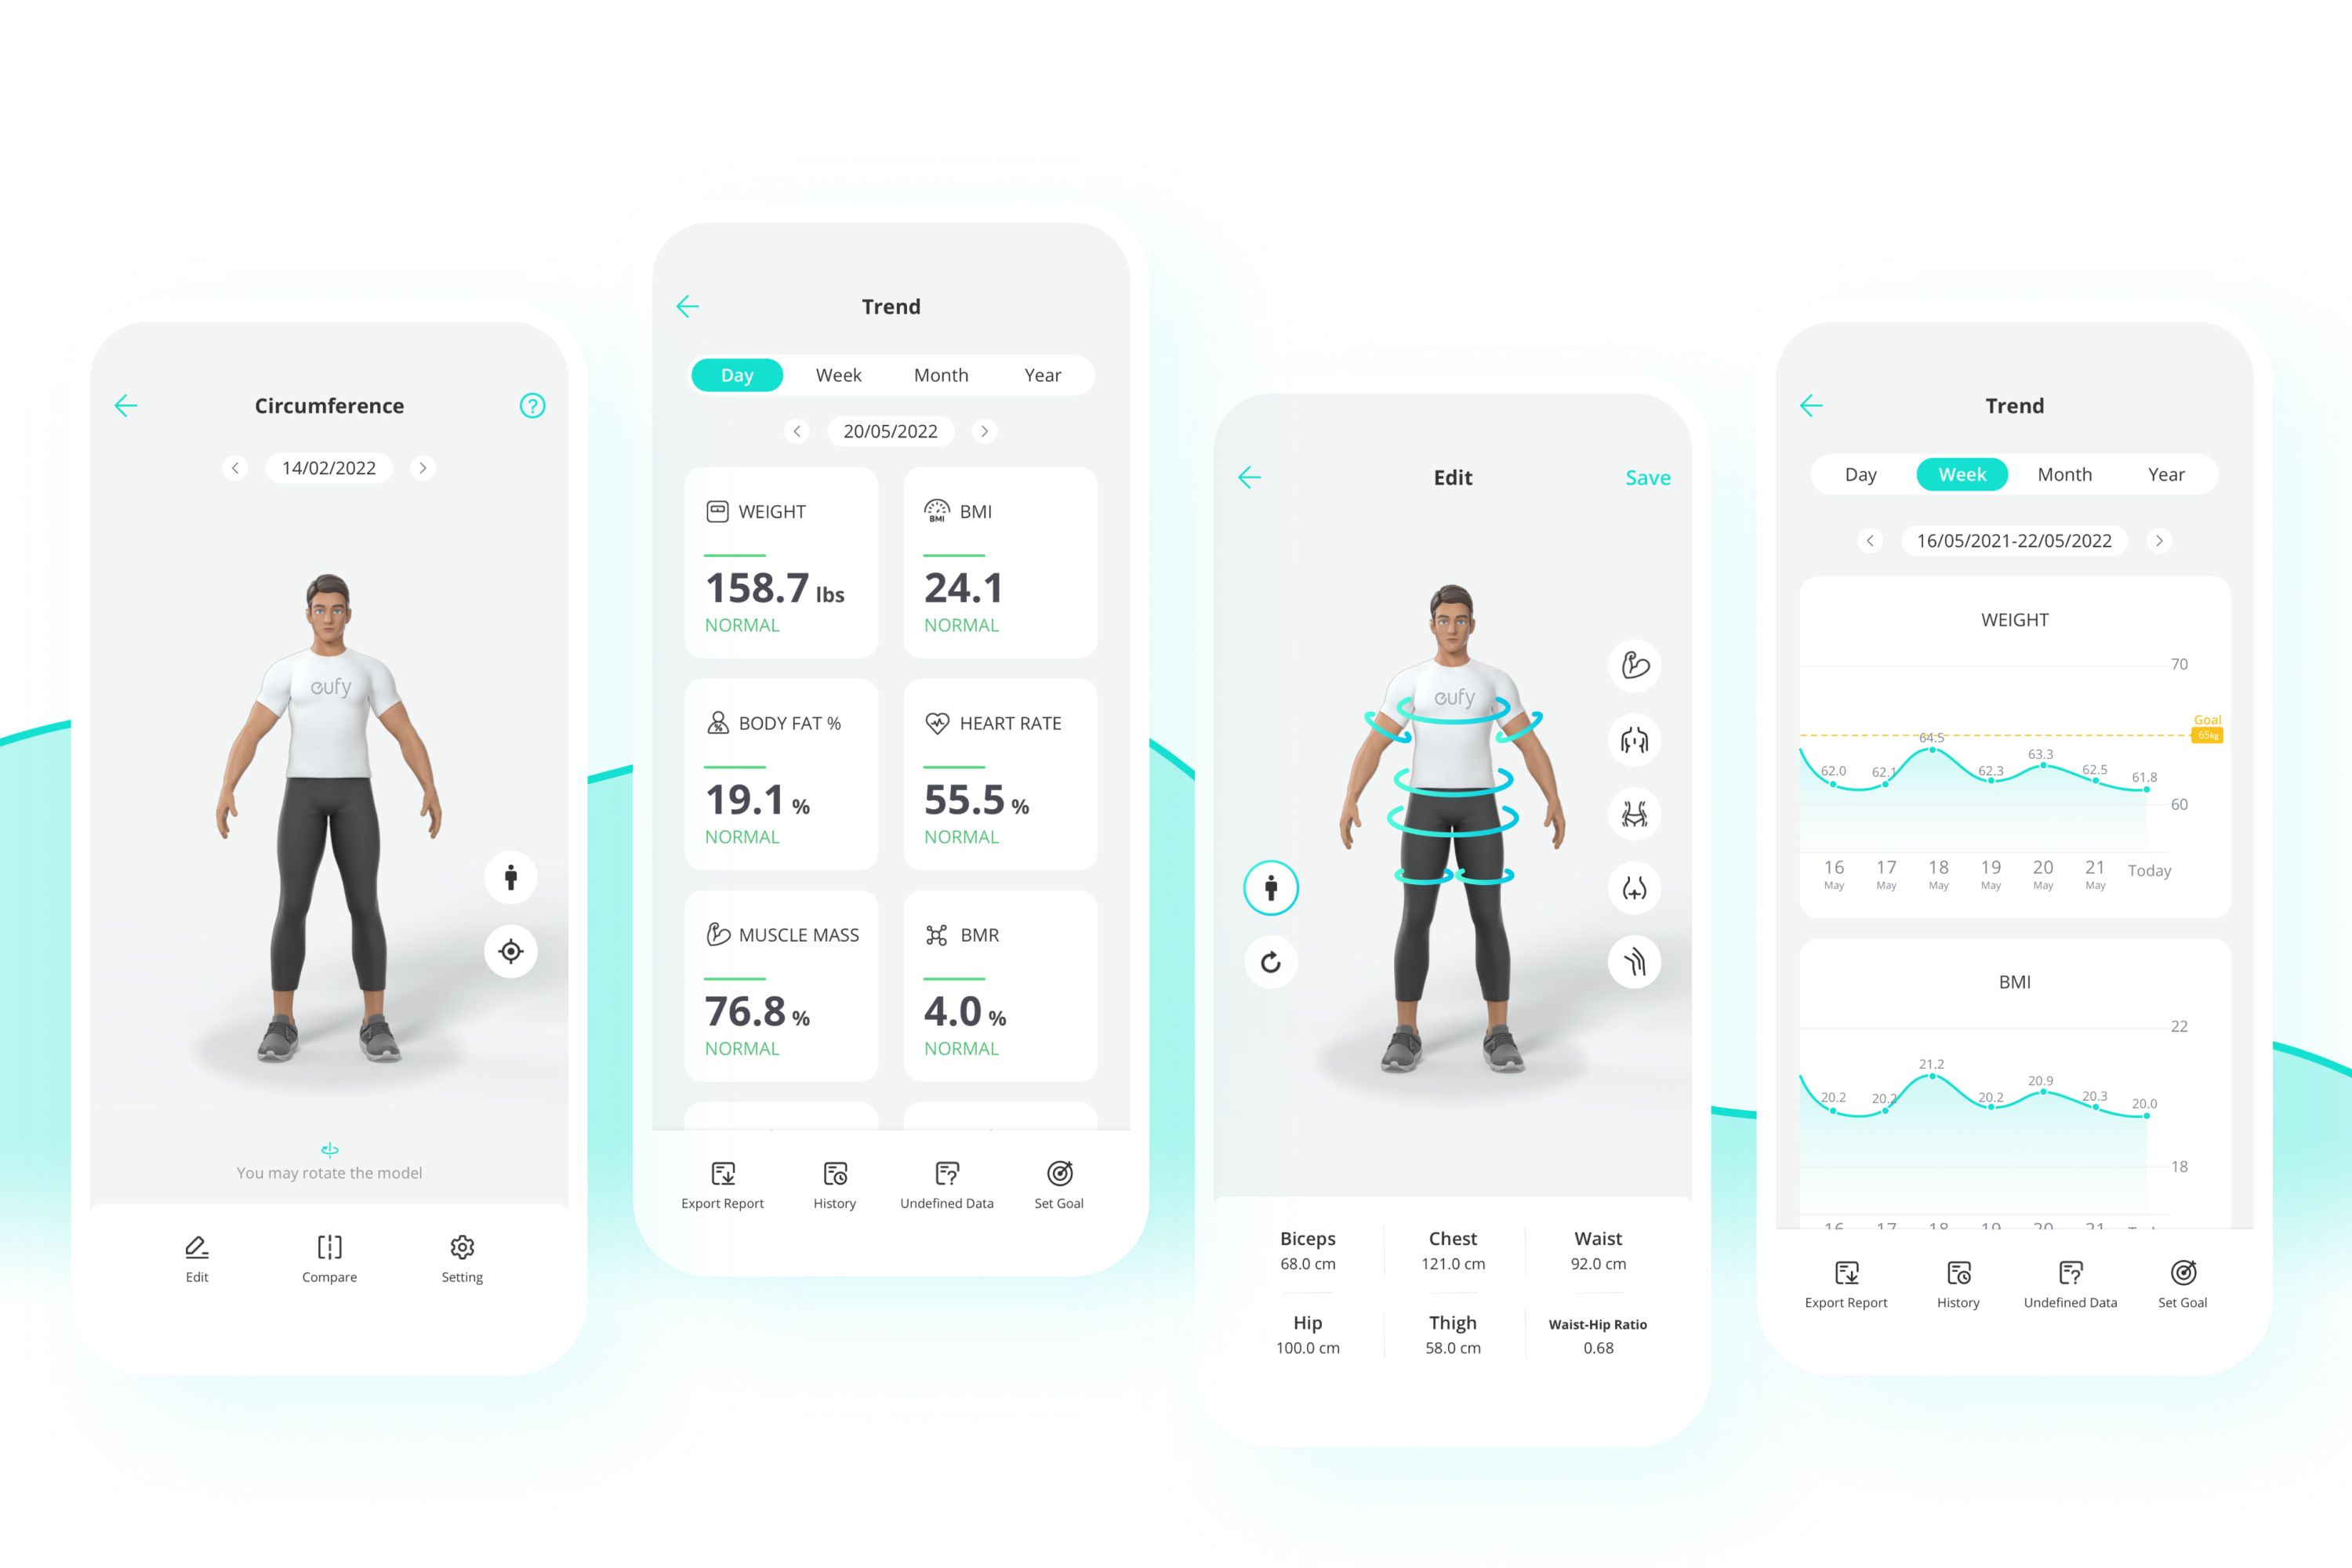 eufyLife Smart Scale P2 Pro App